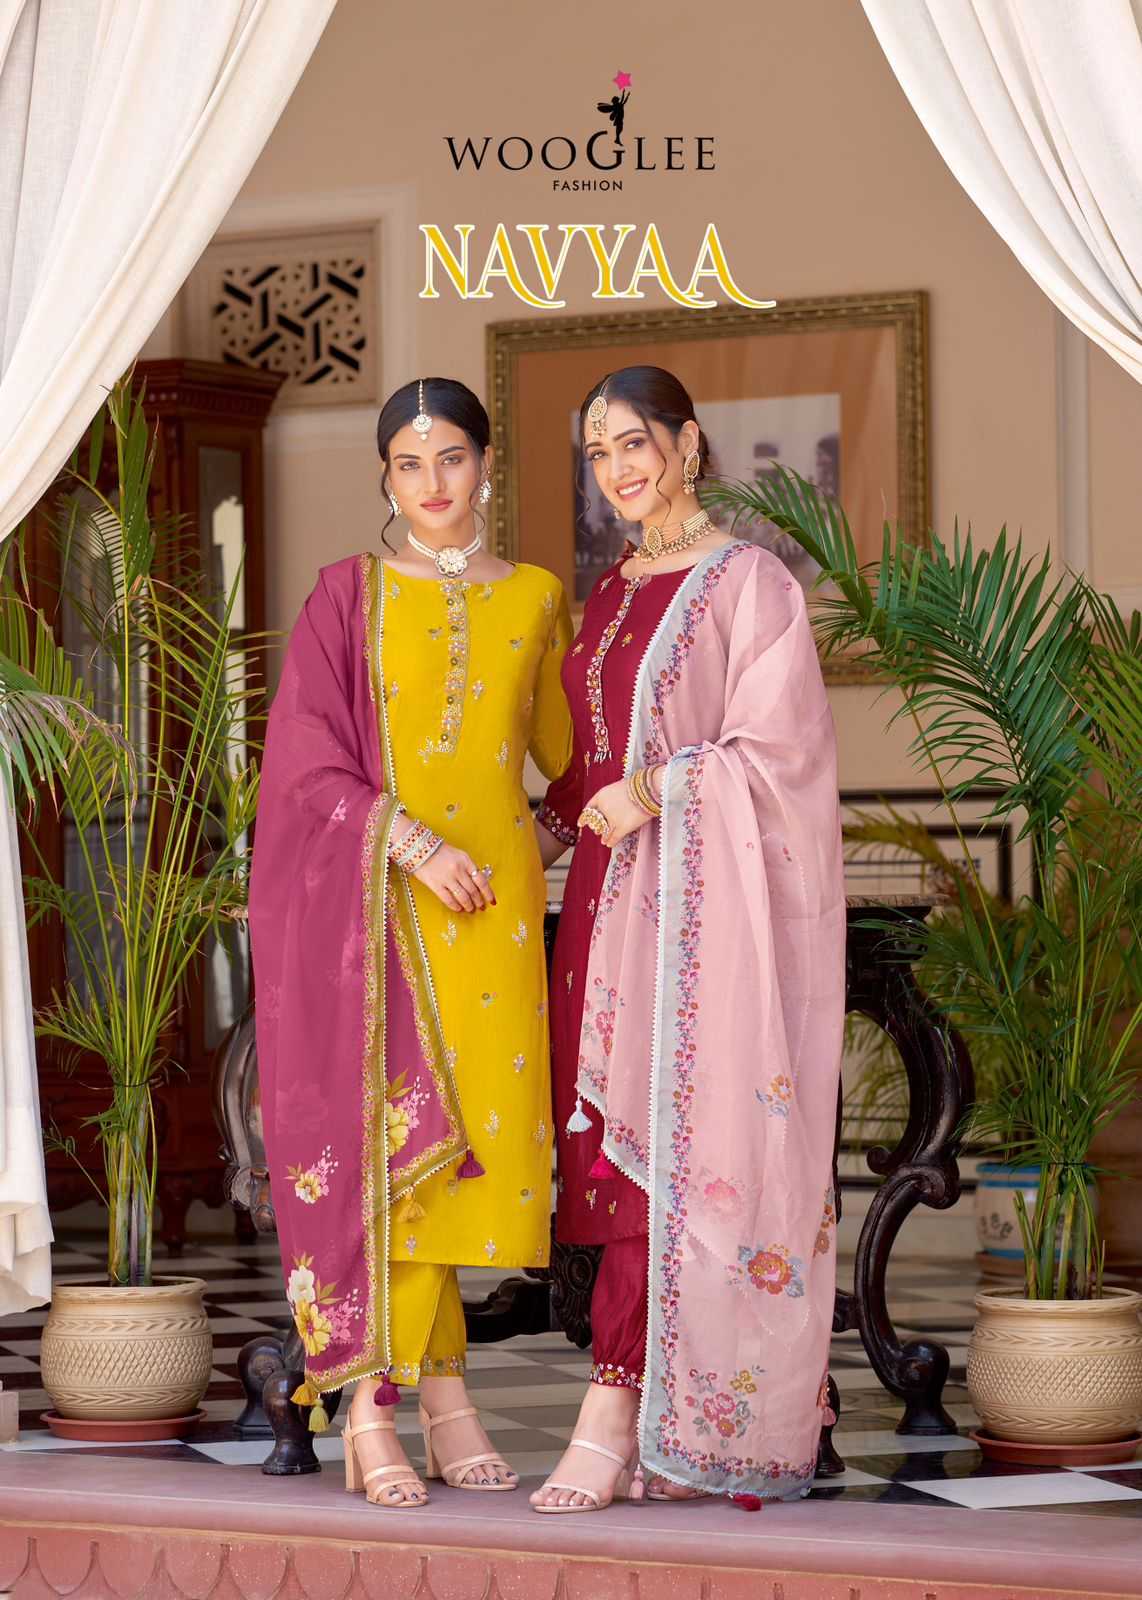 wooglee navyaa amazing wear readymade salwar suit collection 